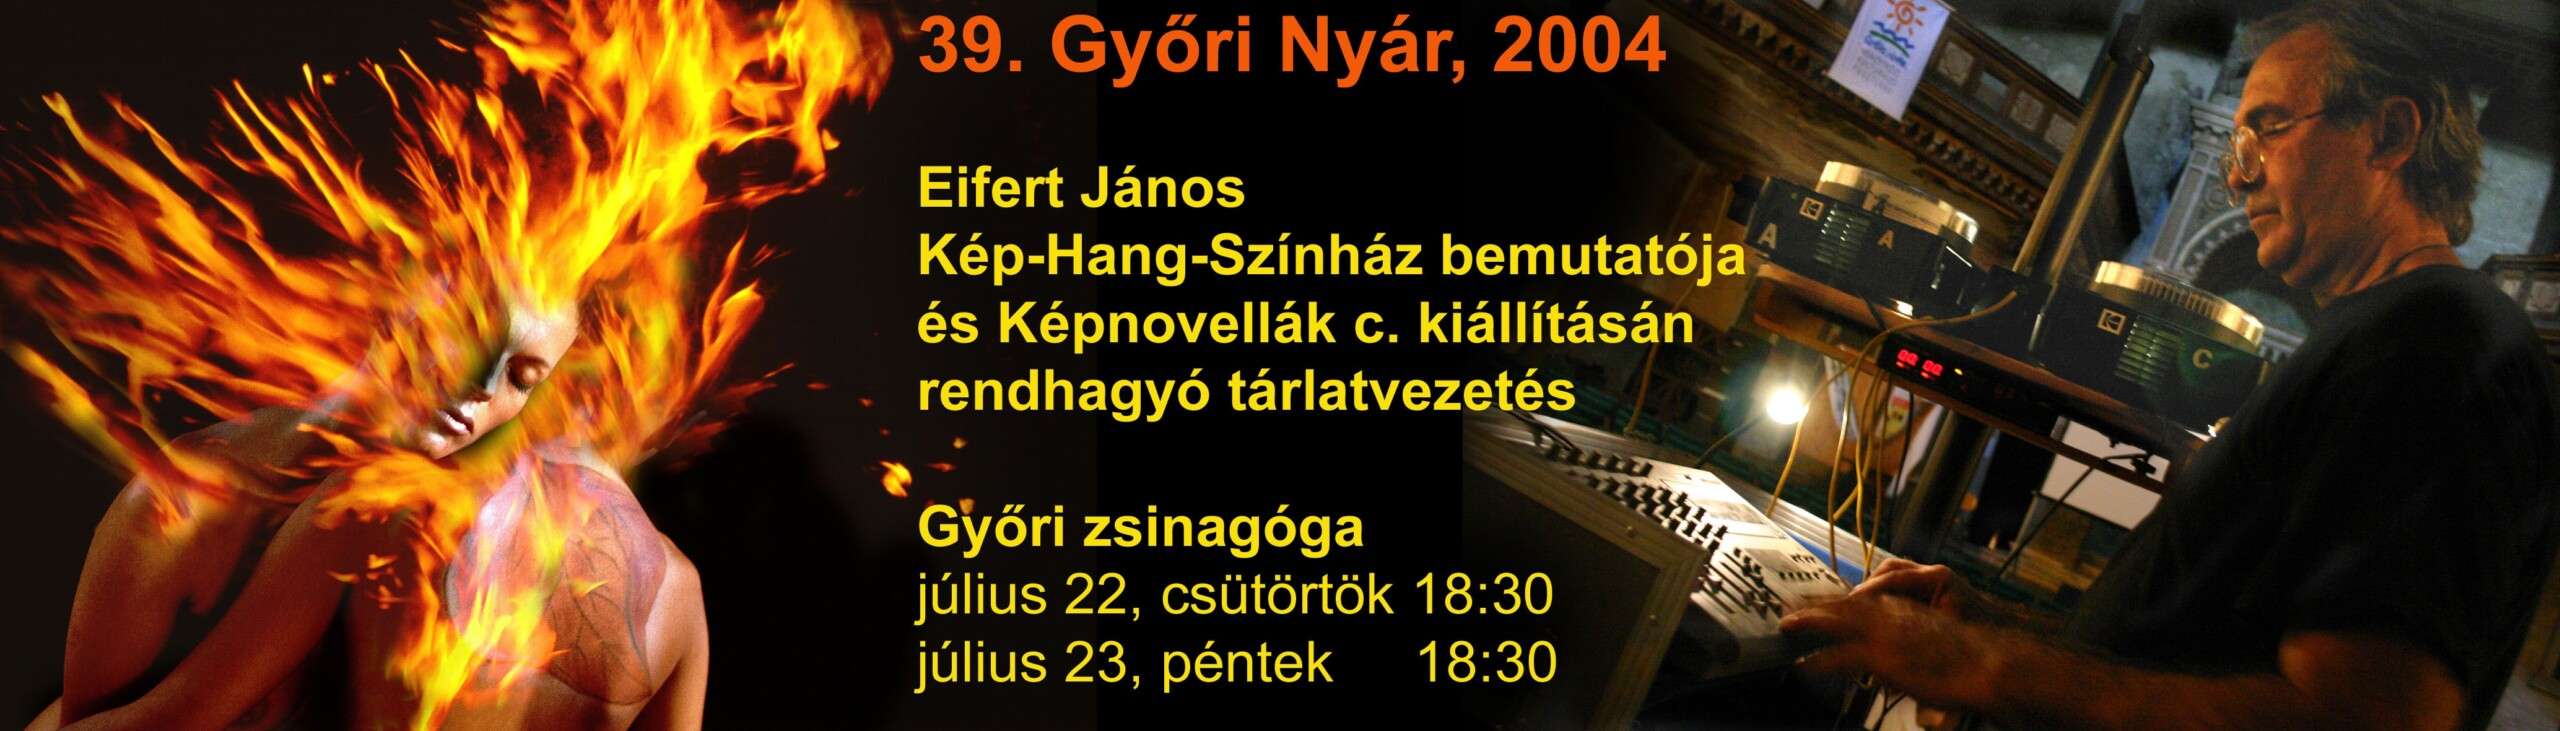 39-gyori-nyar-2004-eifert-janos-kep-hang-szinhaz-bemutatoja-es-kepnovellak-c-kiallitasan-rendhagyo-t.jpg